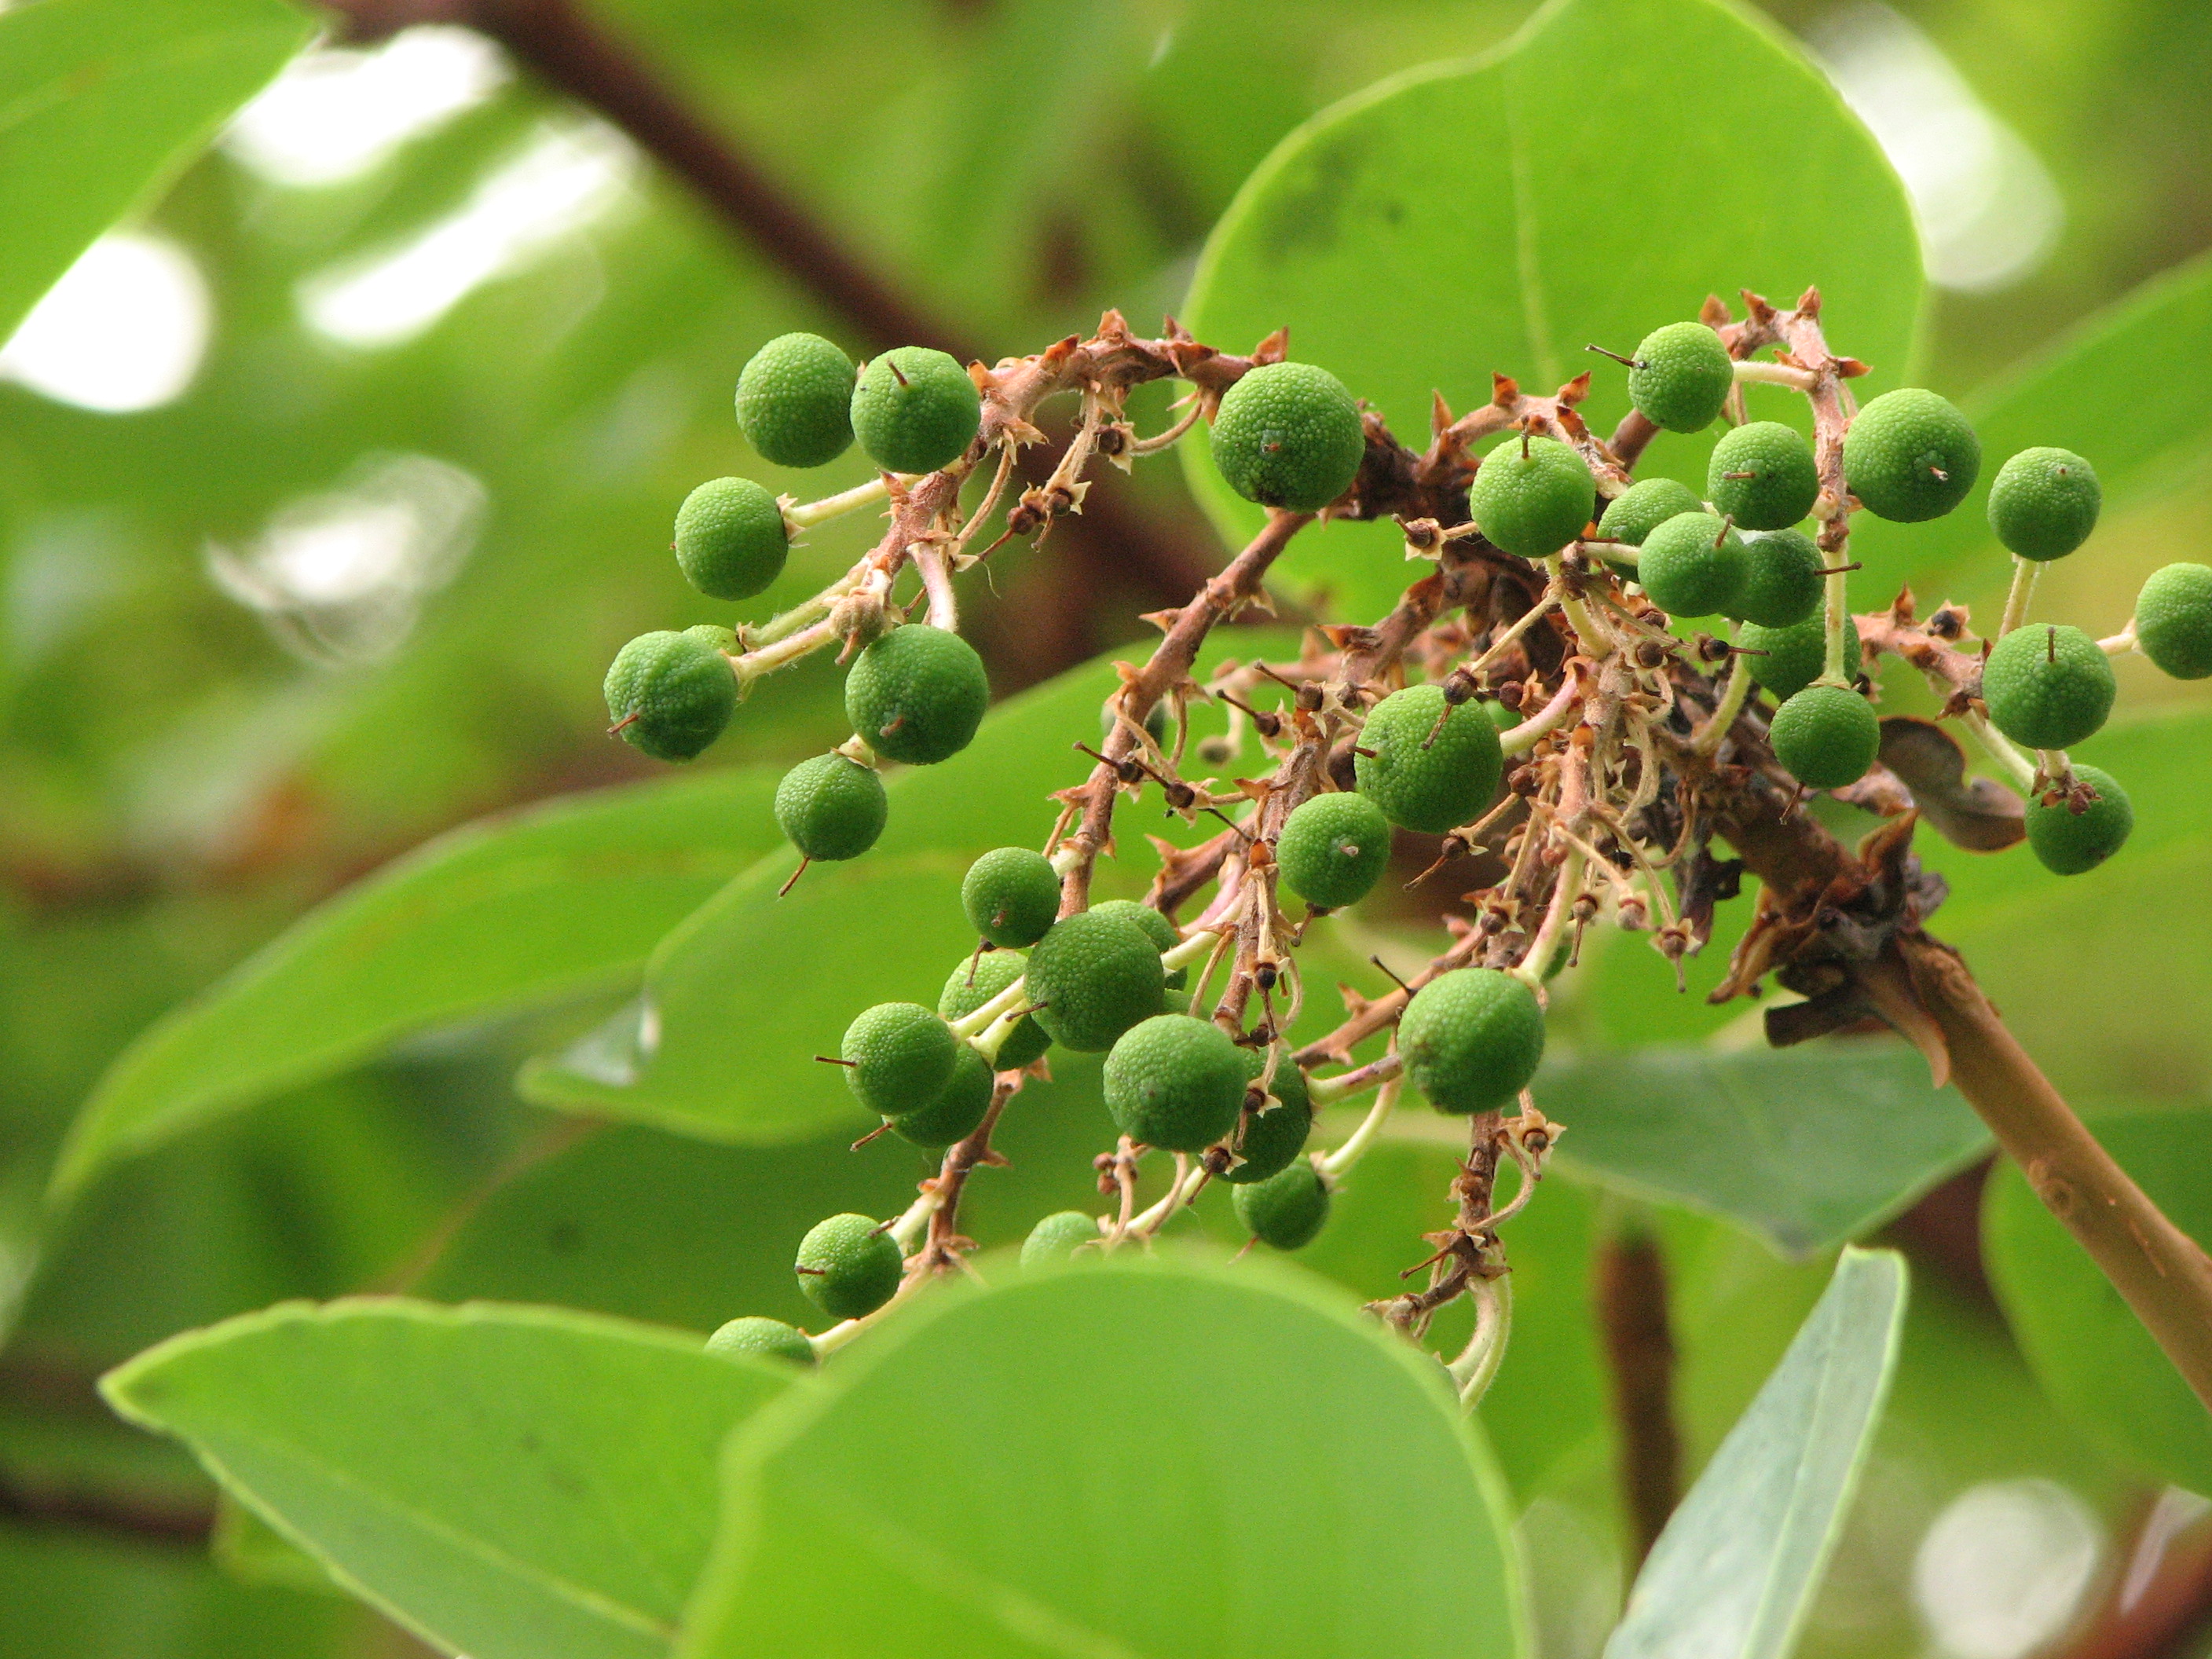 File:Green pea like berry growth on tree branch.jpg - Wikimedia Commons